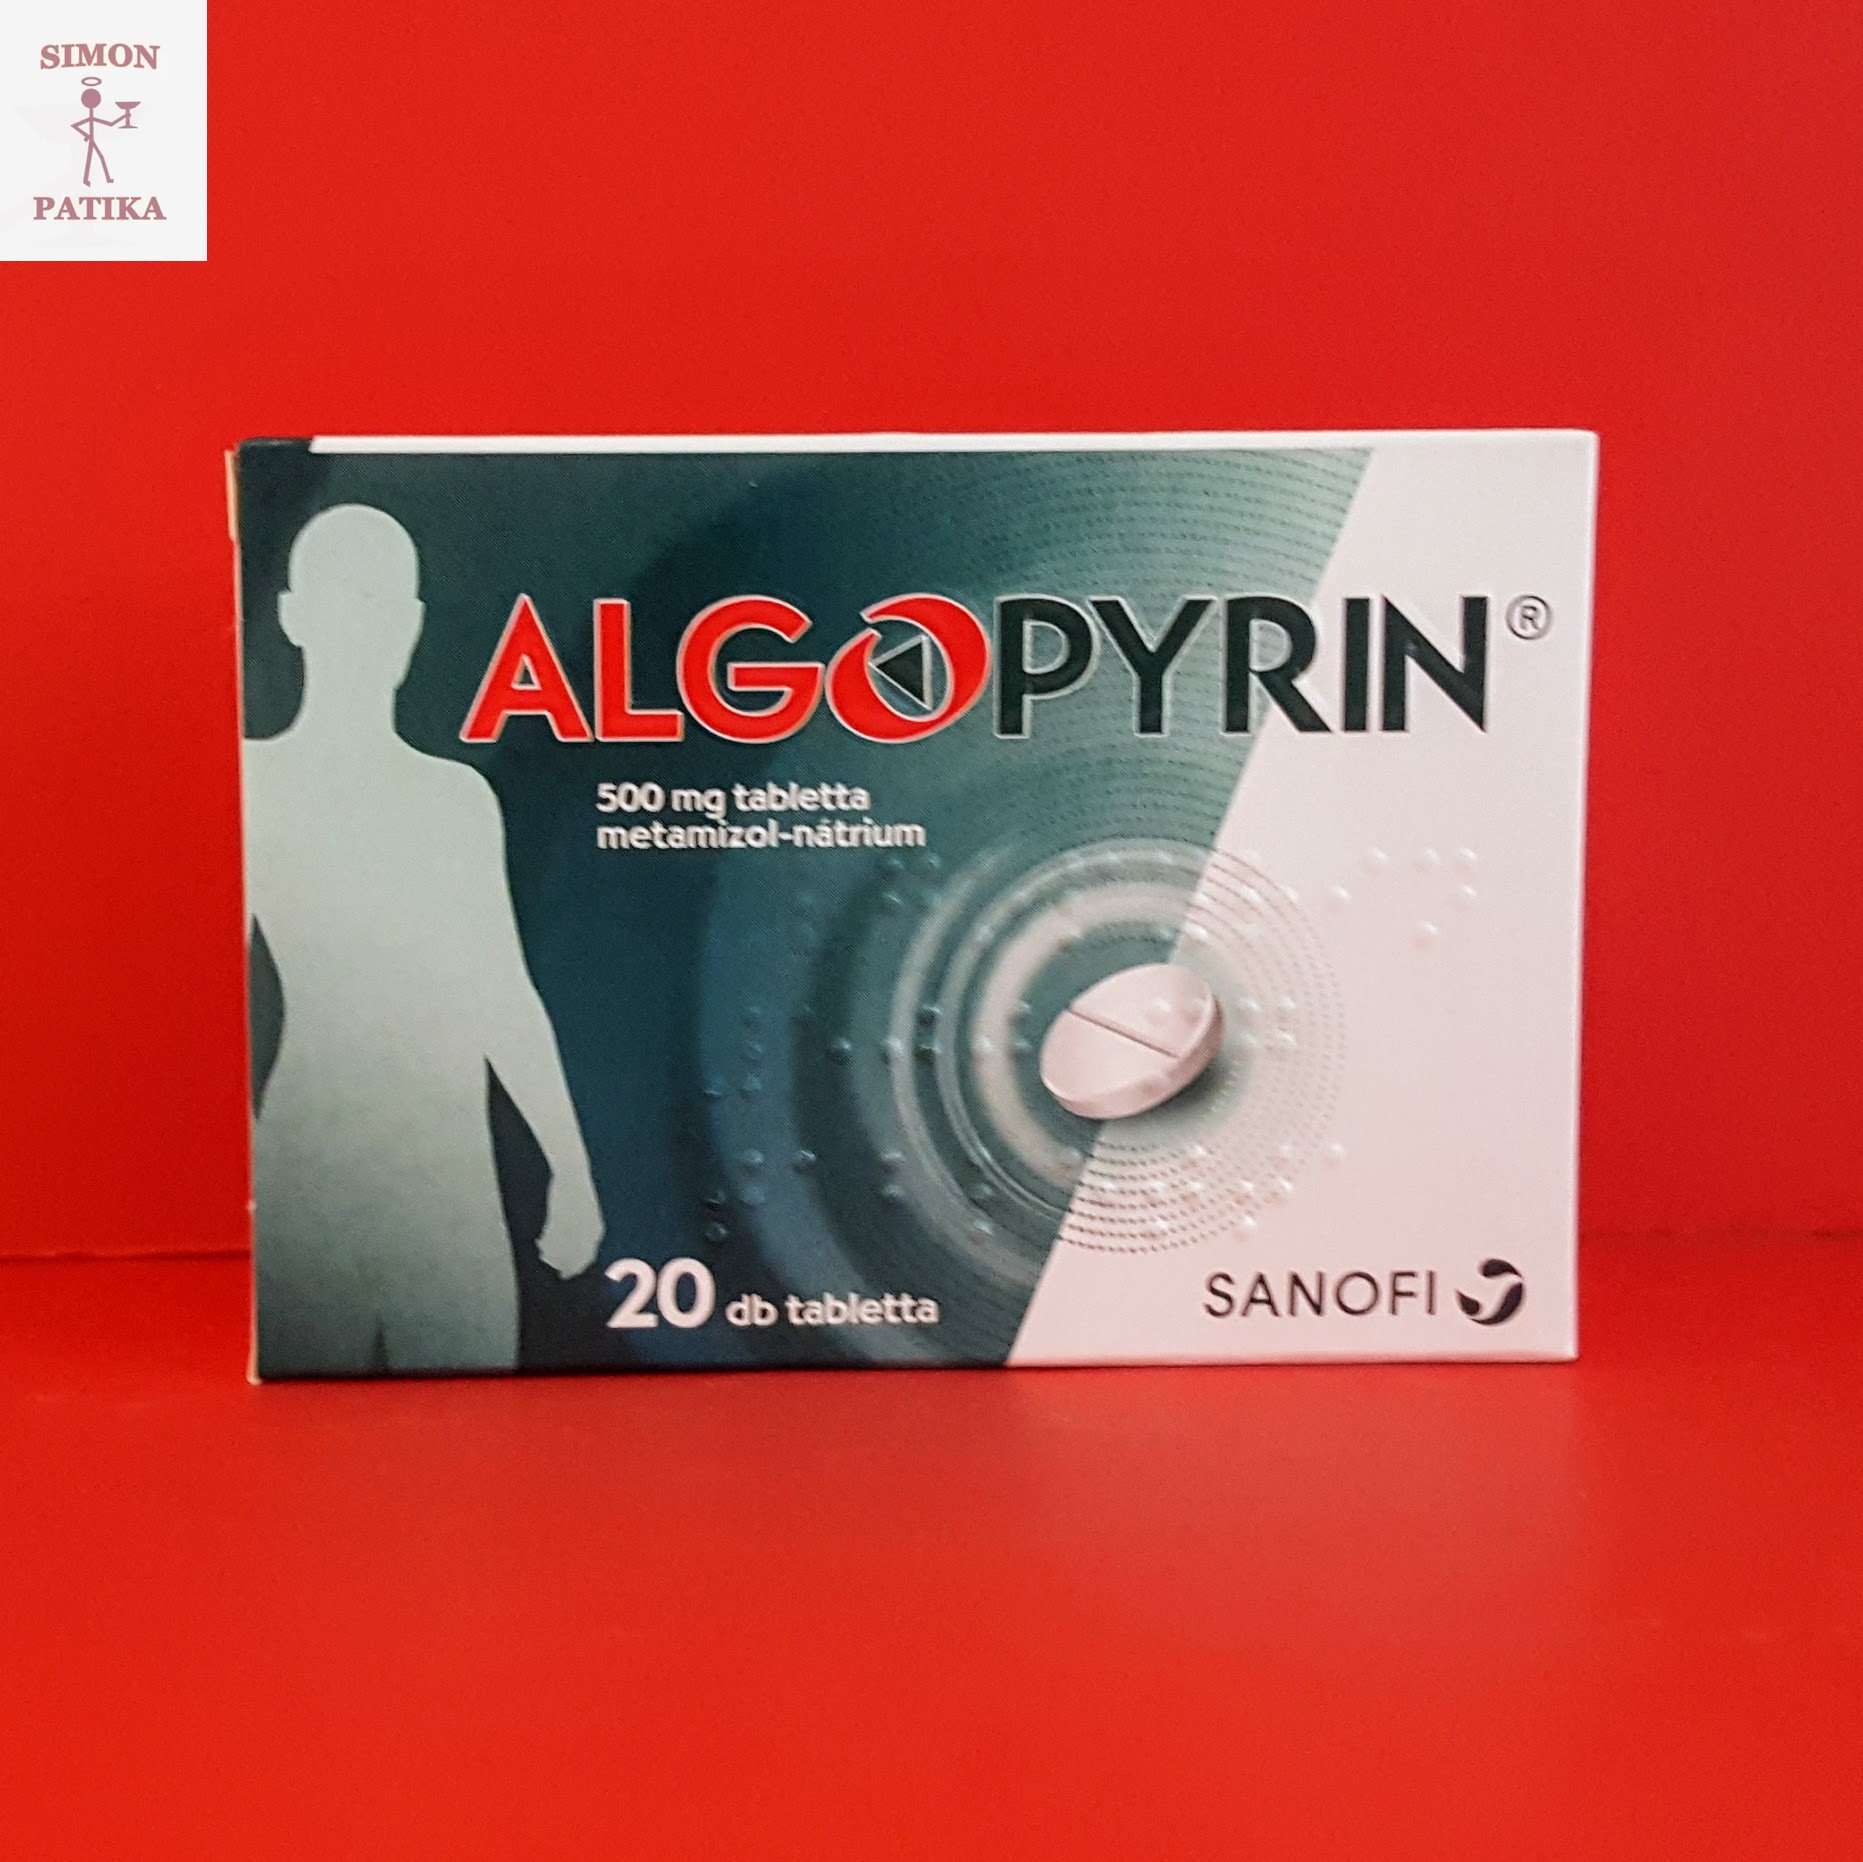 ALGOPYRIN 500 mg tabletta